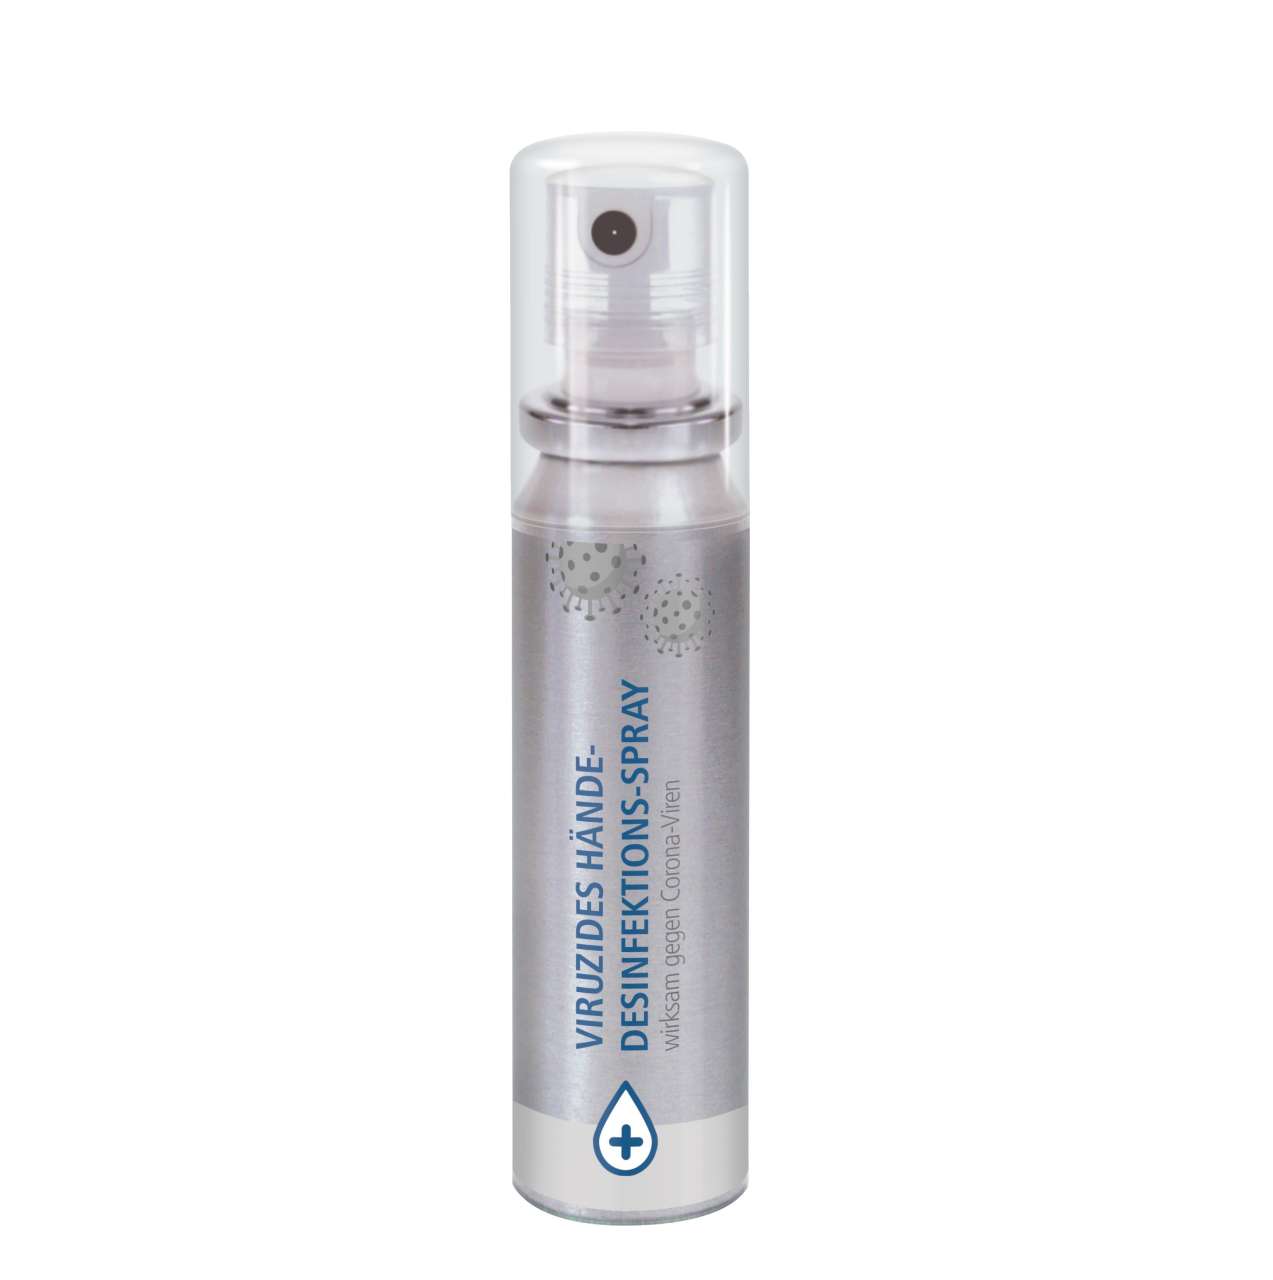 20 ml Pocket Spray - Hände-Desinfektionsspray (DIN EN 1500) - Label